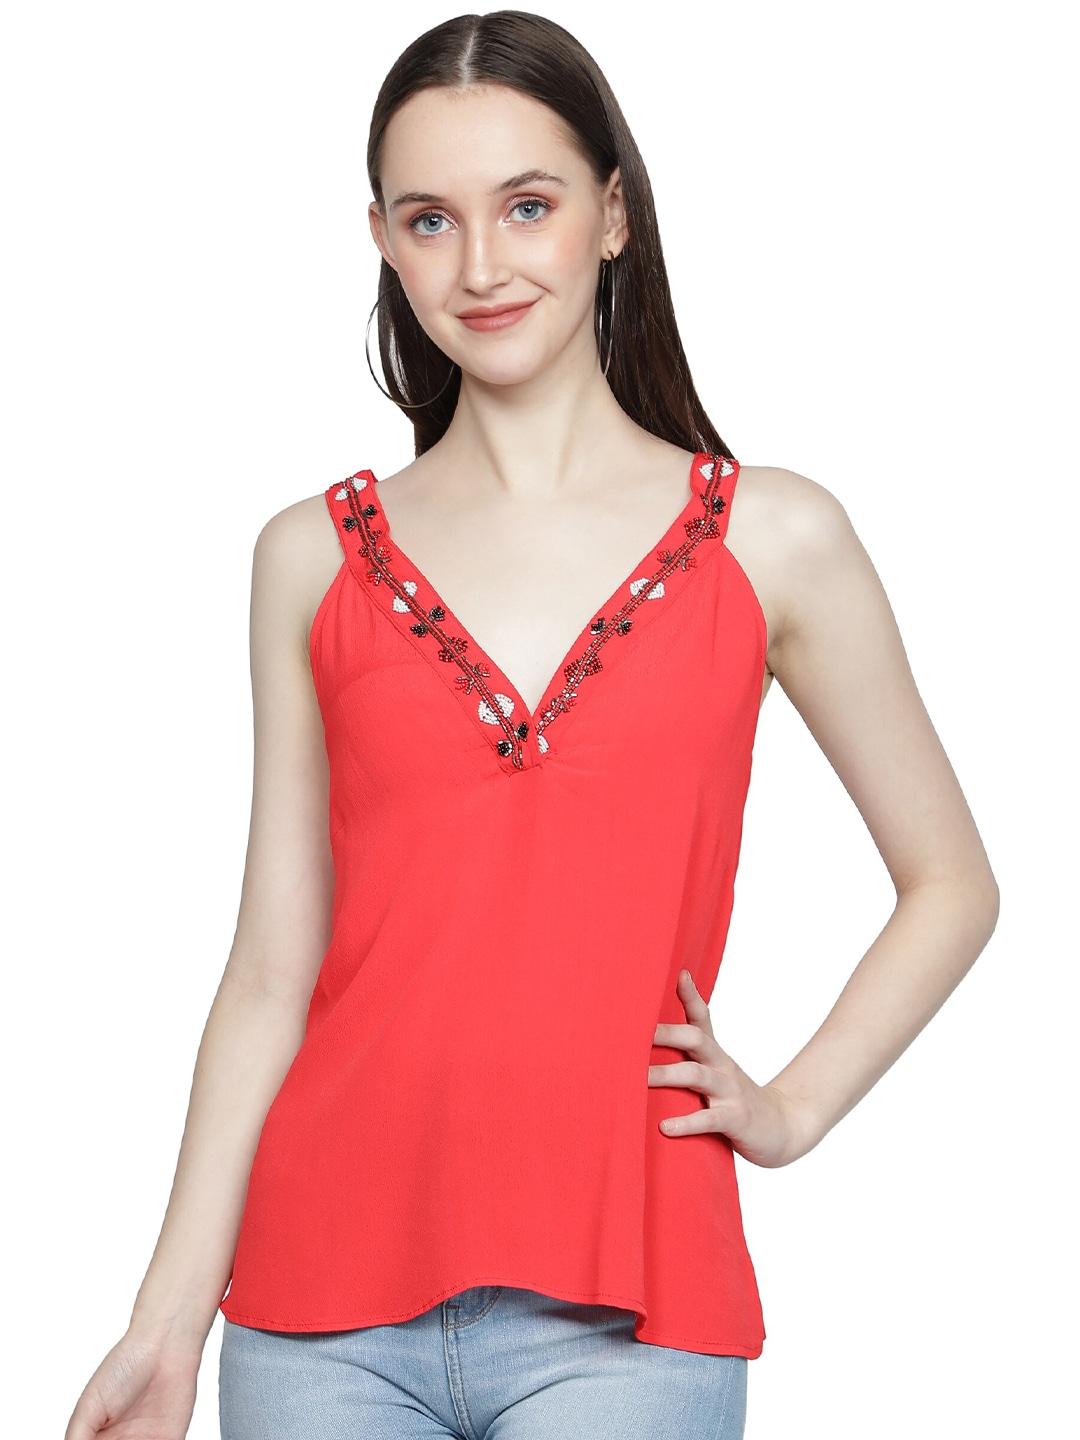 nuevosdamas women red solid sleeveless top